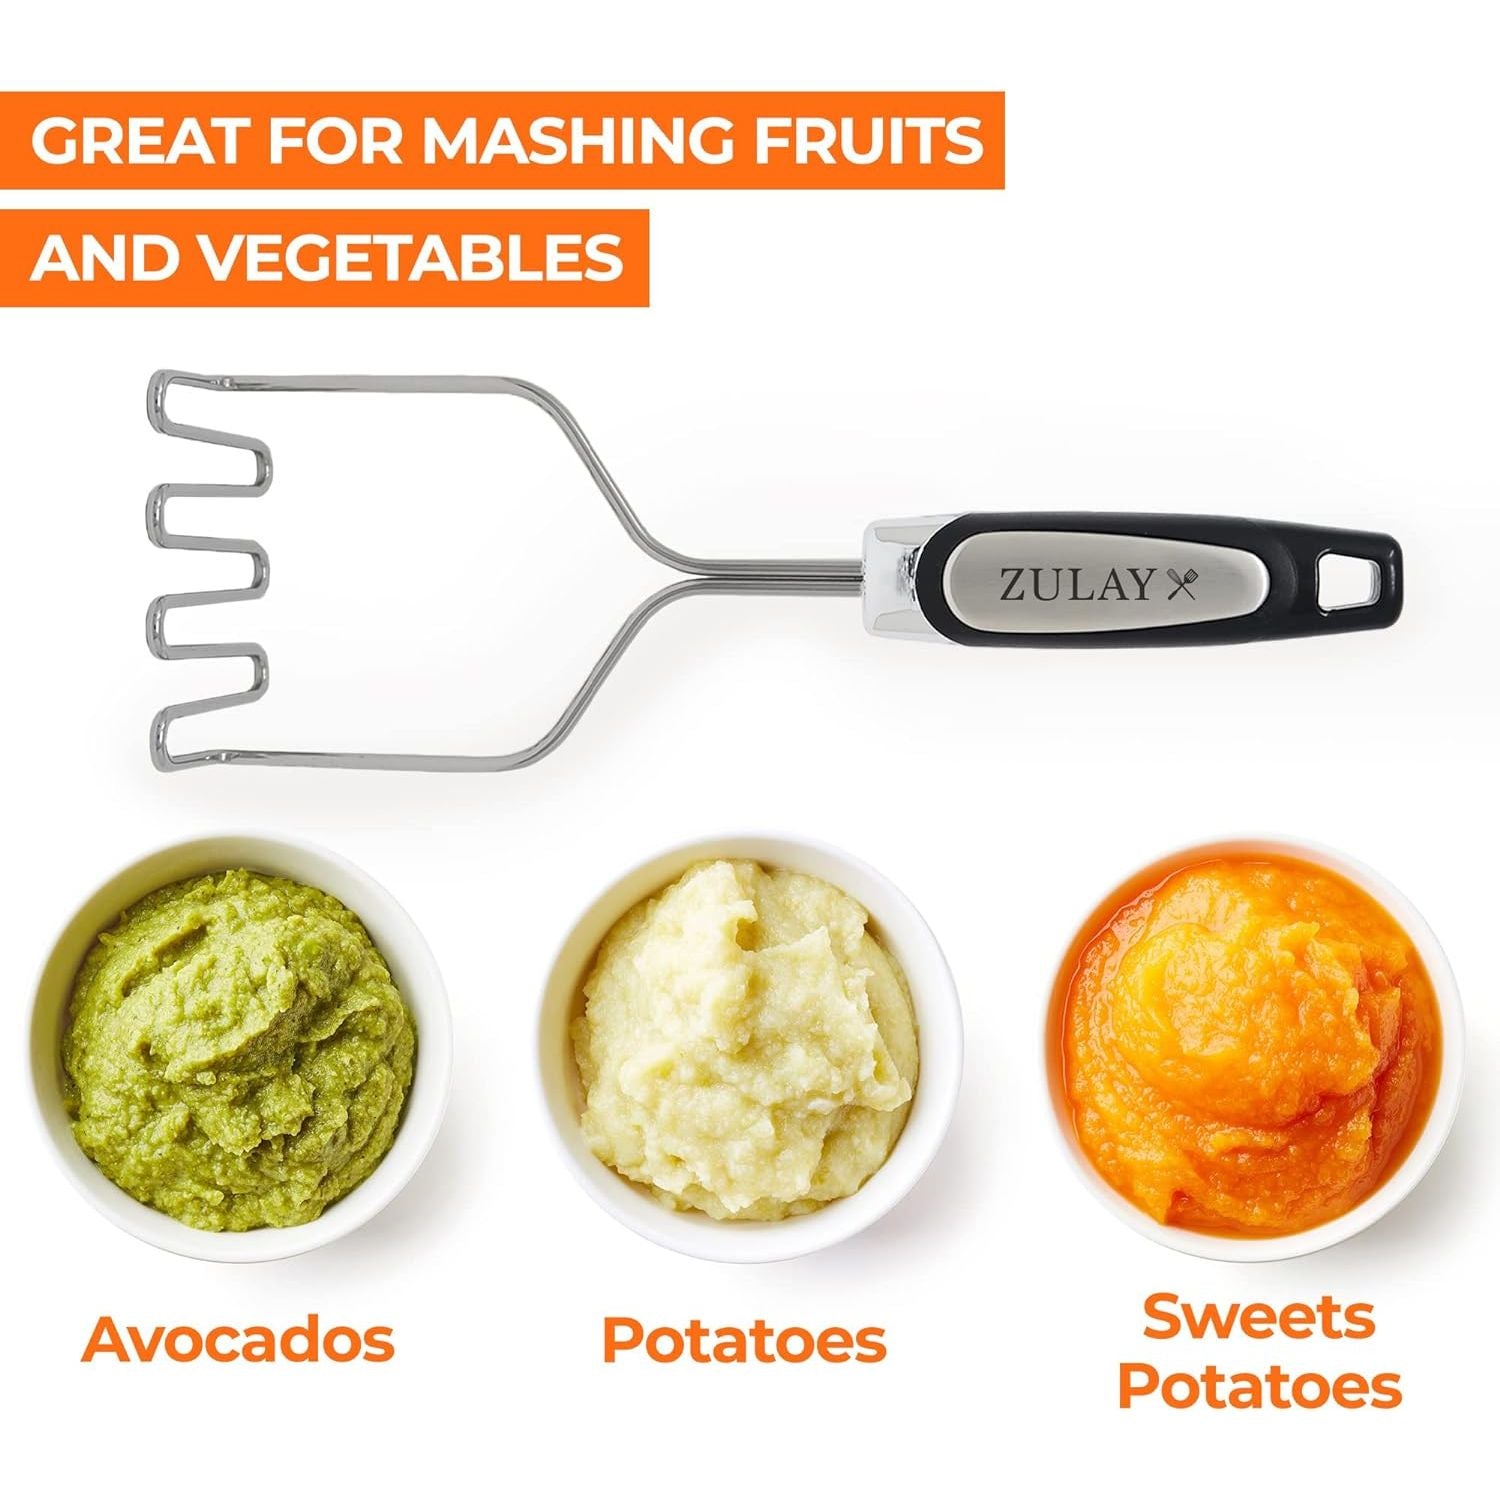 this potato masher can mash Avocado, Potatoes, Sweet potatoes